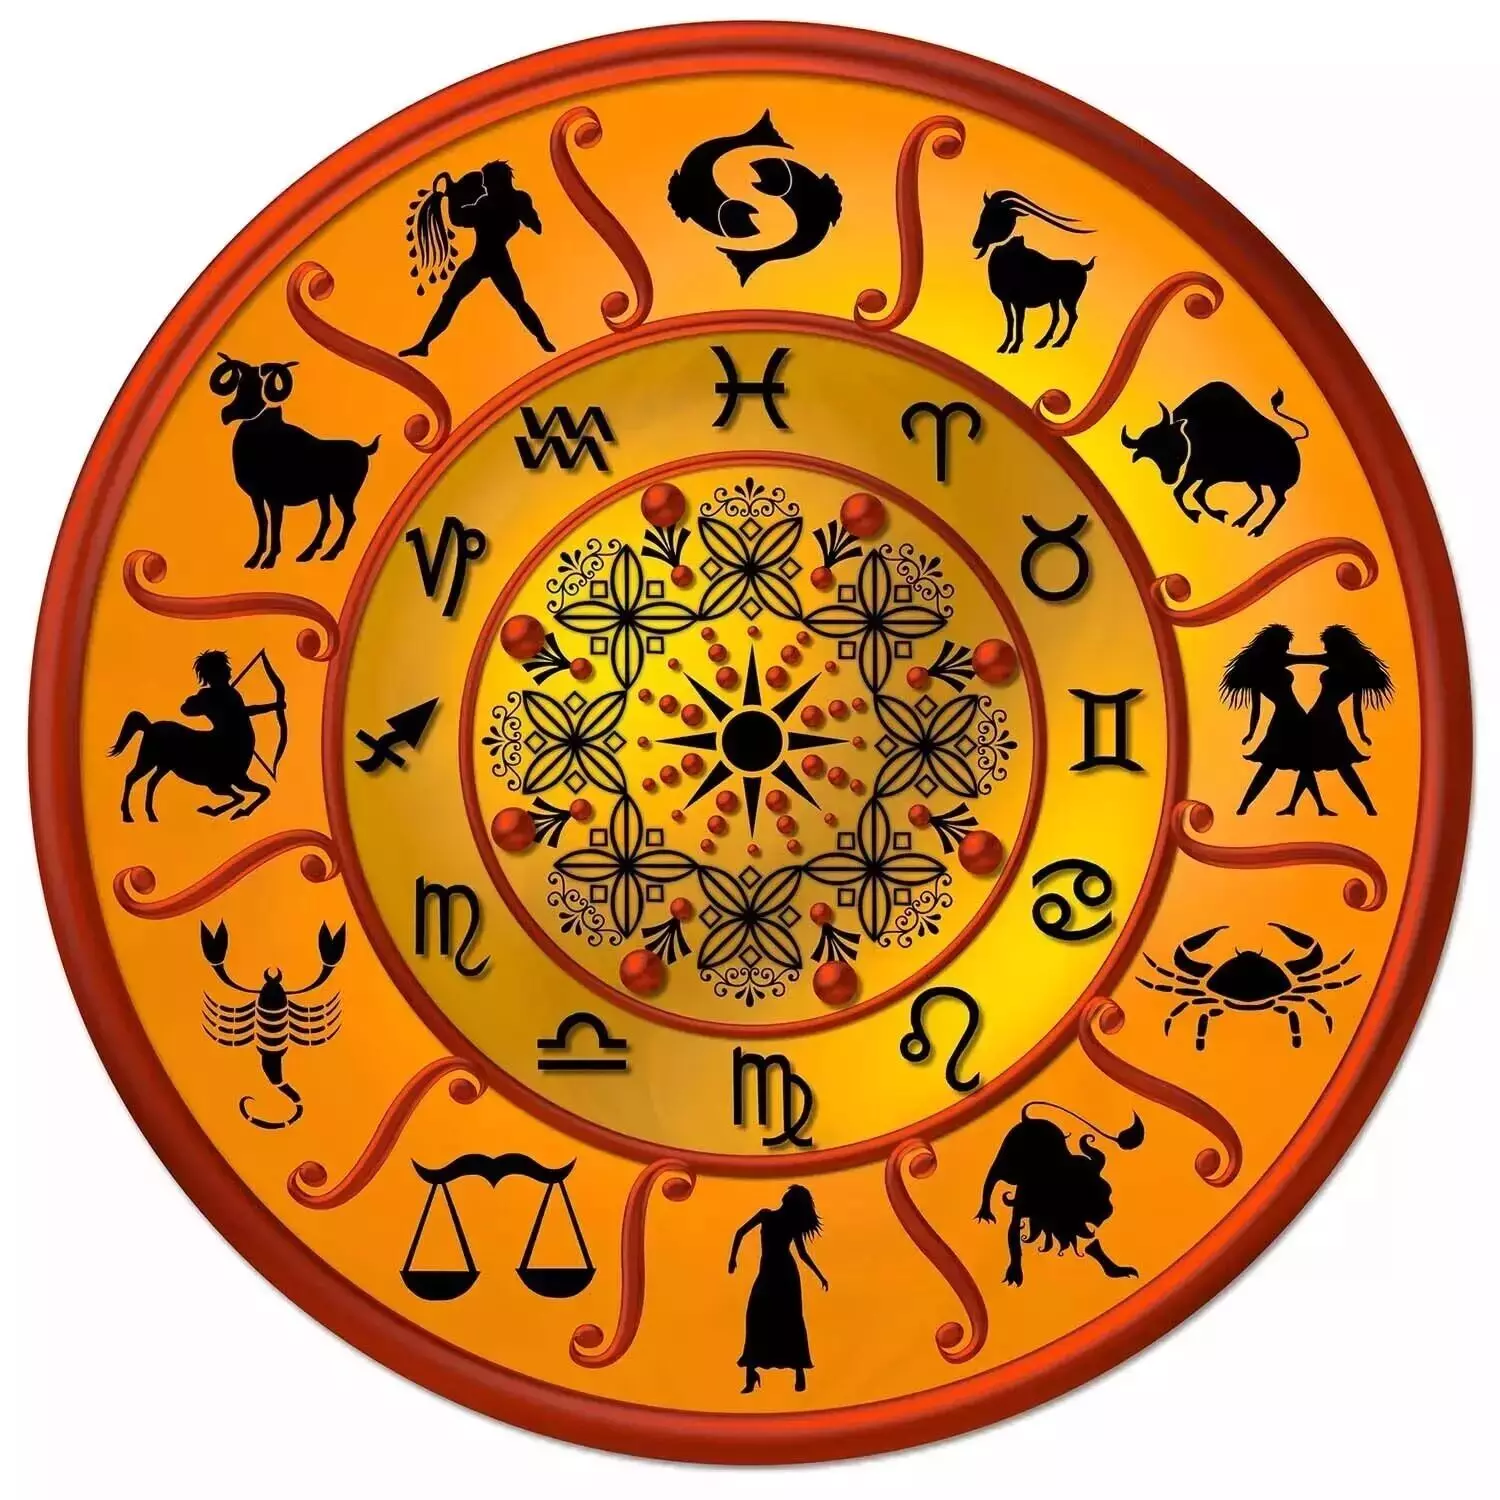 07 November – Know your todays horoscope